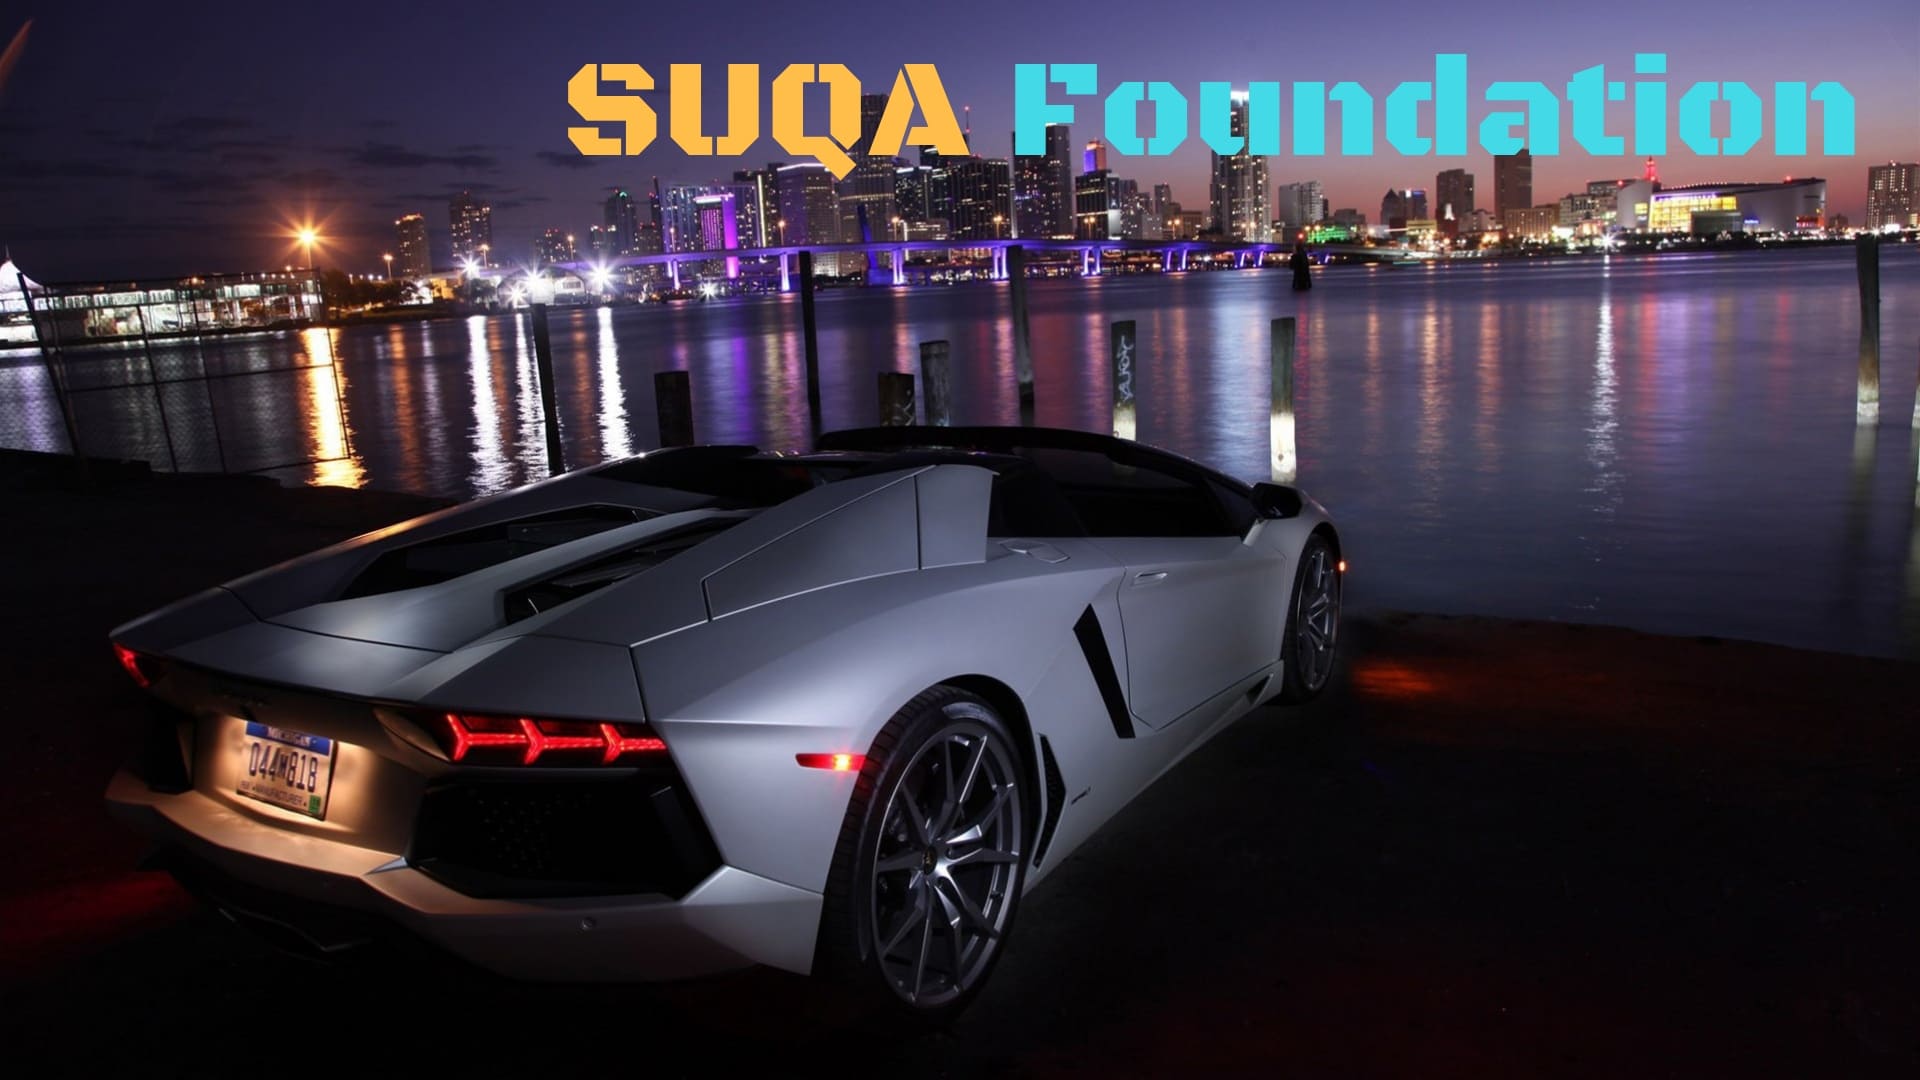 SUQA Foundation (1).jpg